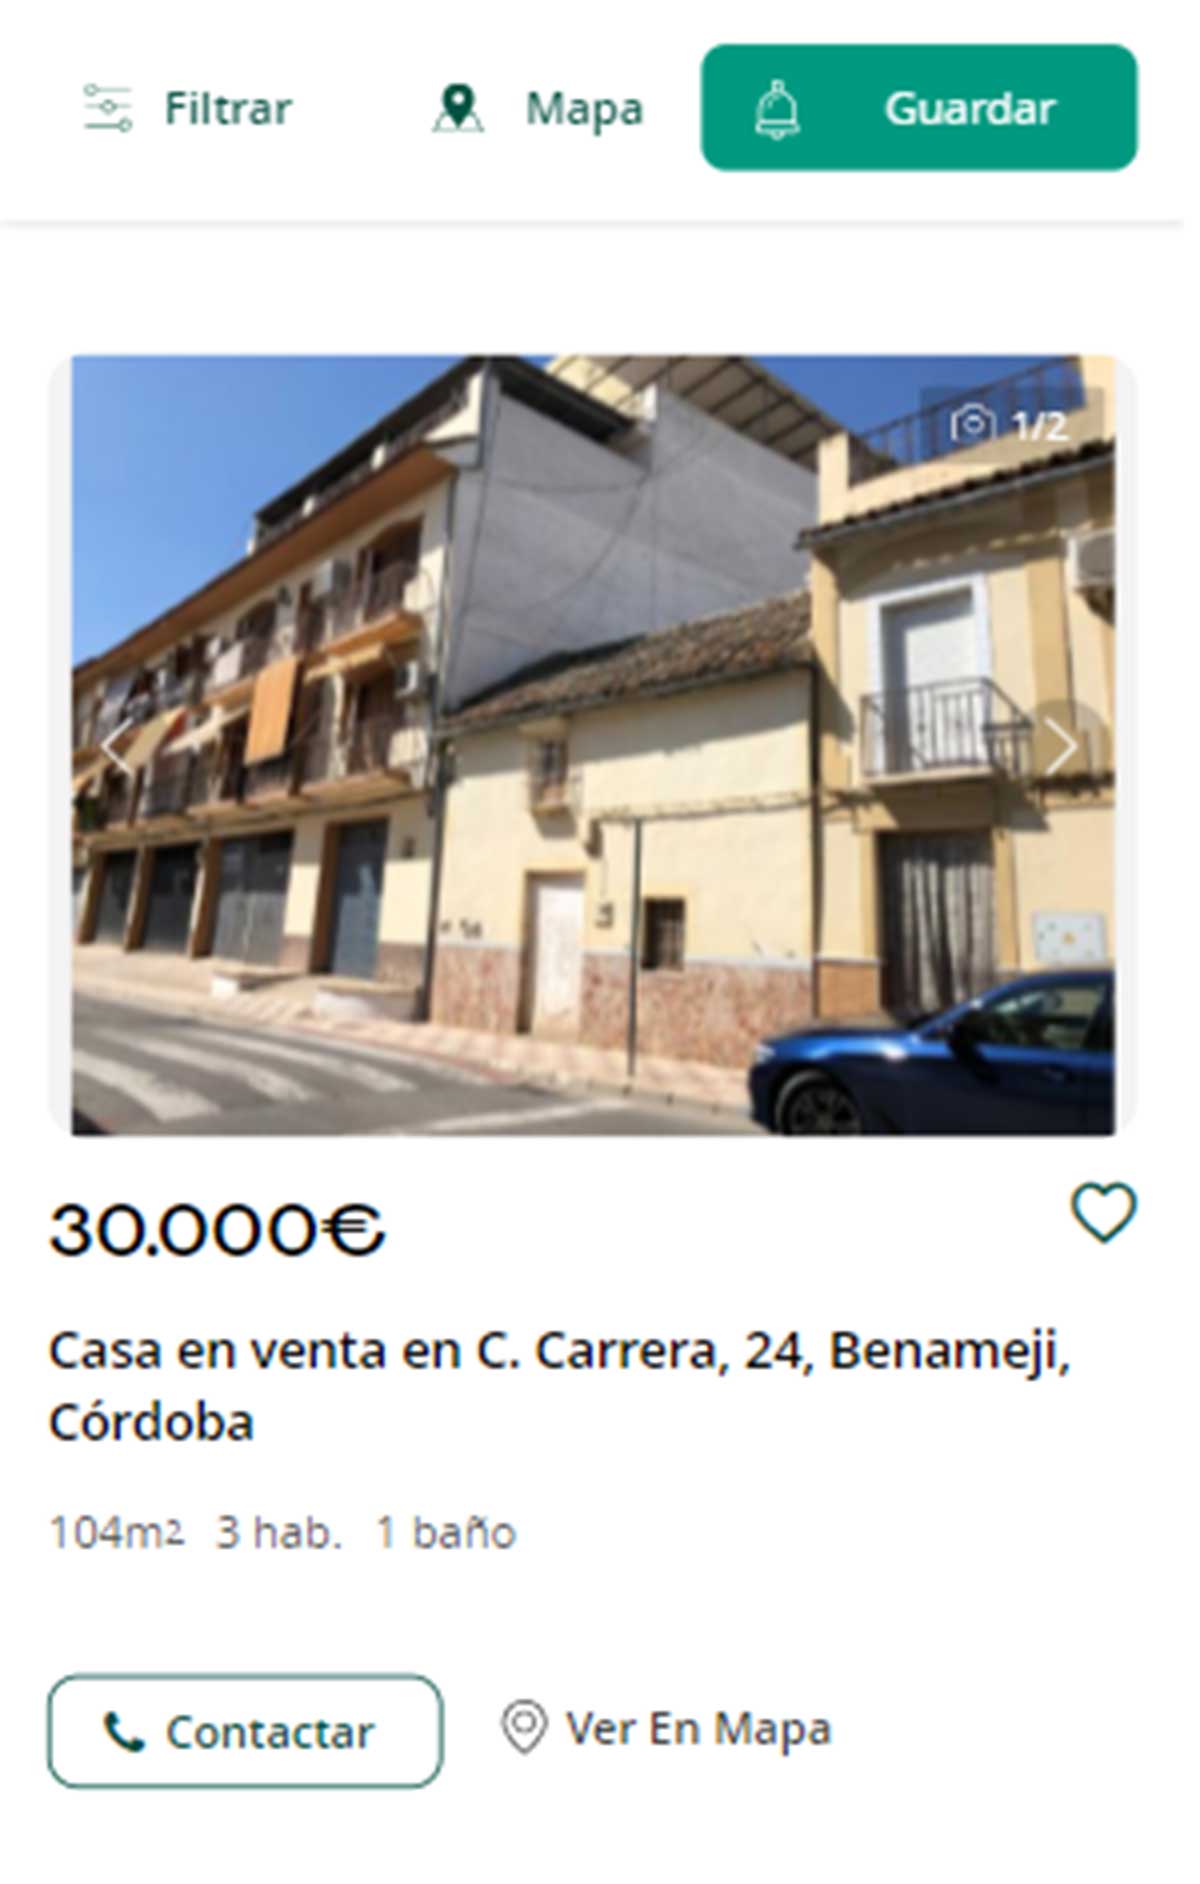 Piso a la venta en Córdoba por 30.000 euros